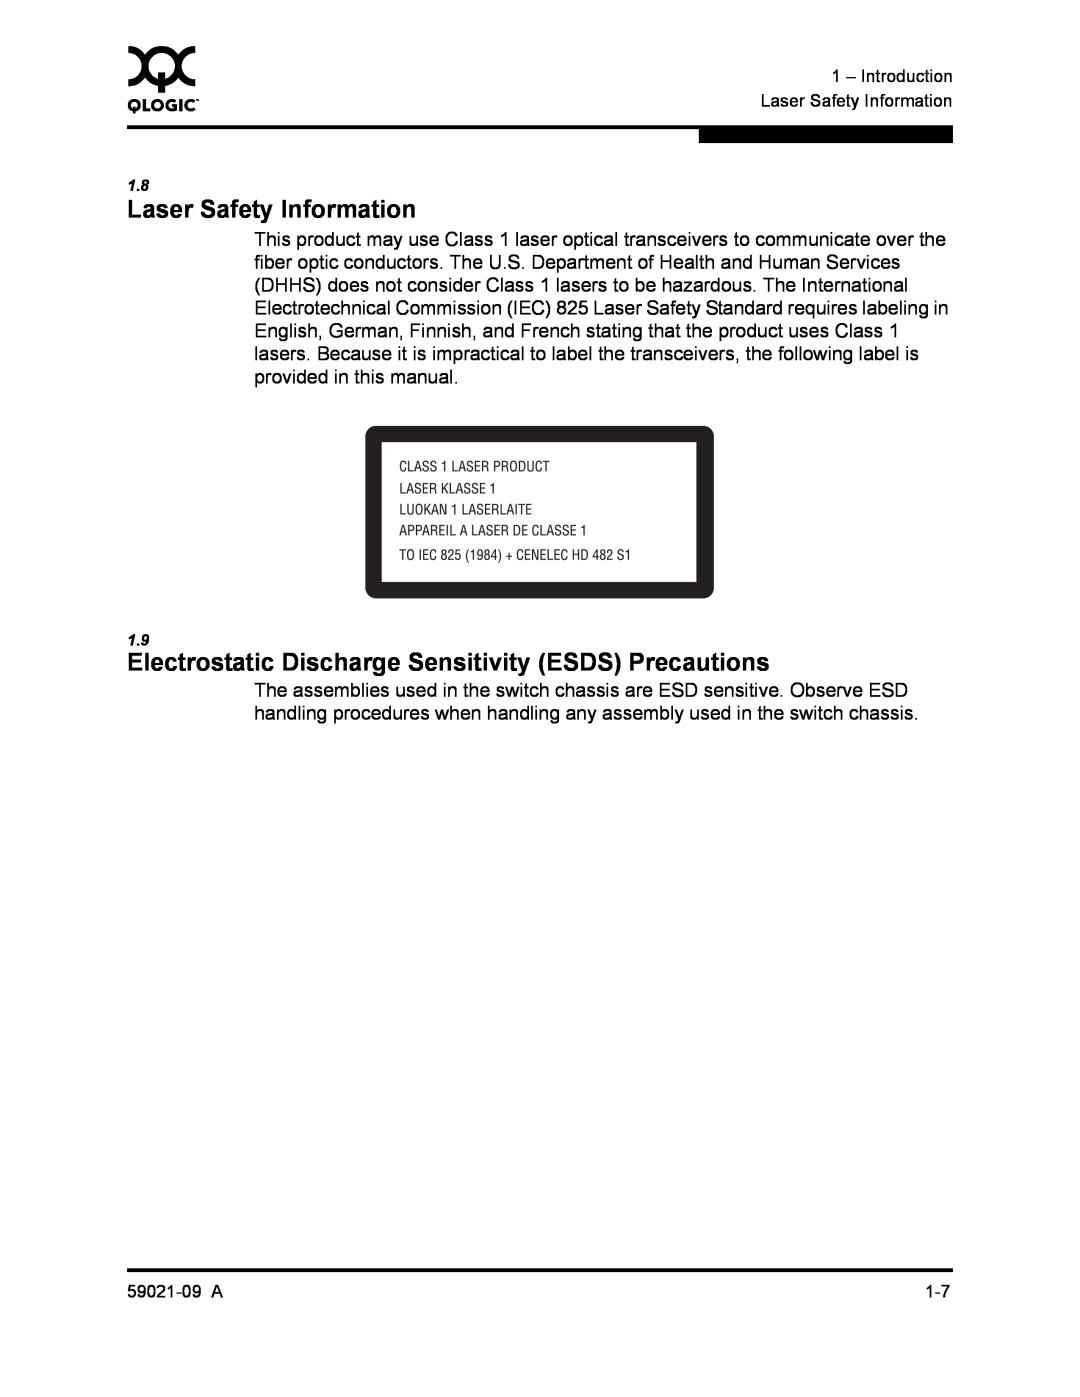 Q-Logic SB2A-16B, QLA2342 manual Laser Safety Information, Electrostatic Discharge Sensitivity ESDS Precautions 